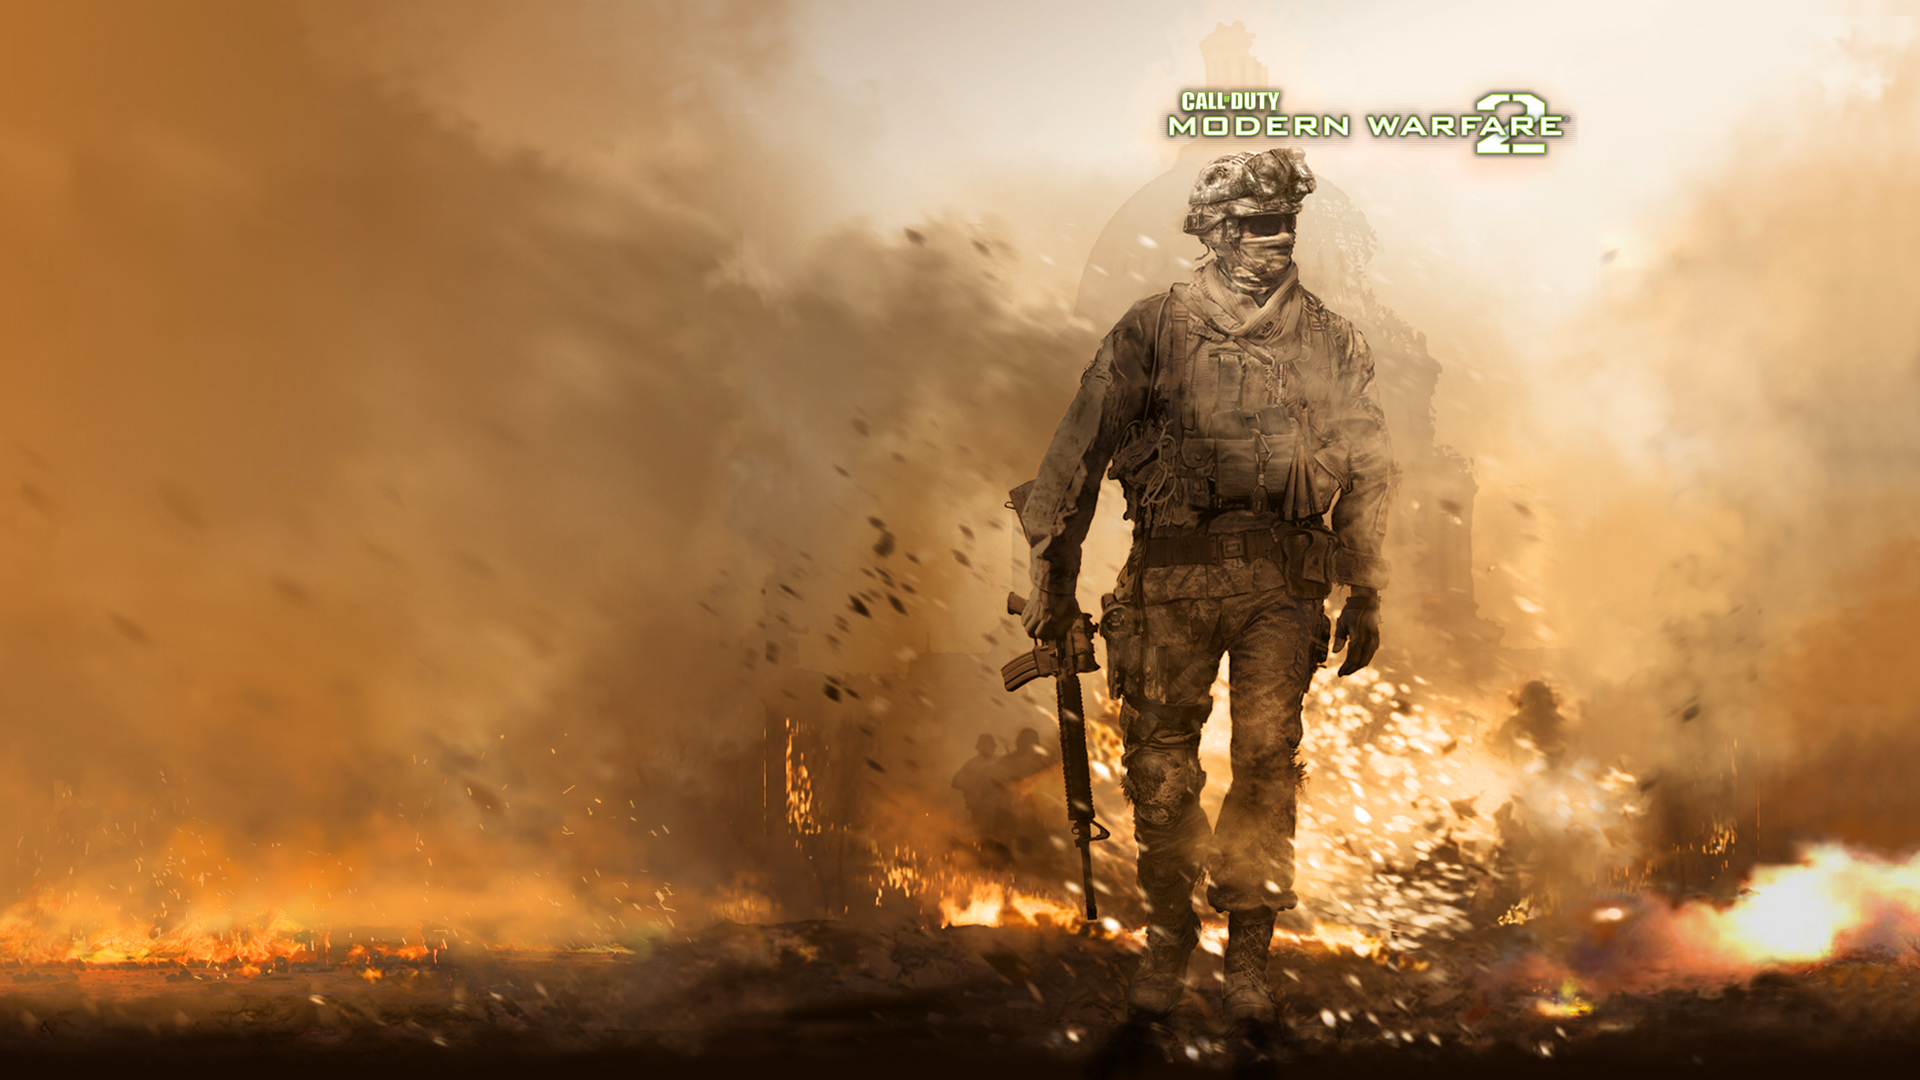 Call Of Duty Modern Warfare 2 wallpaper   406930 1920x1080